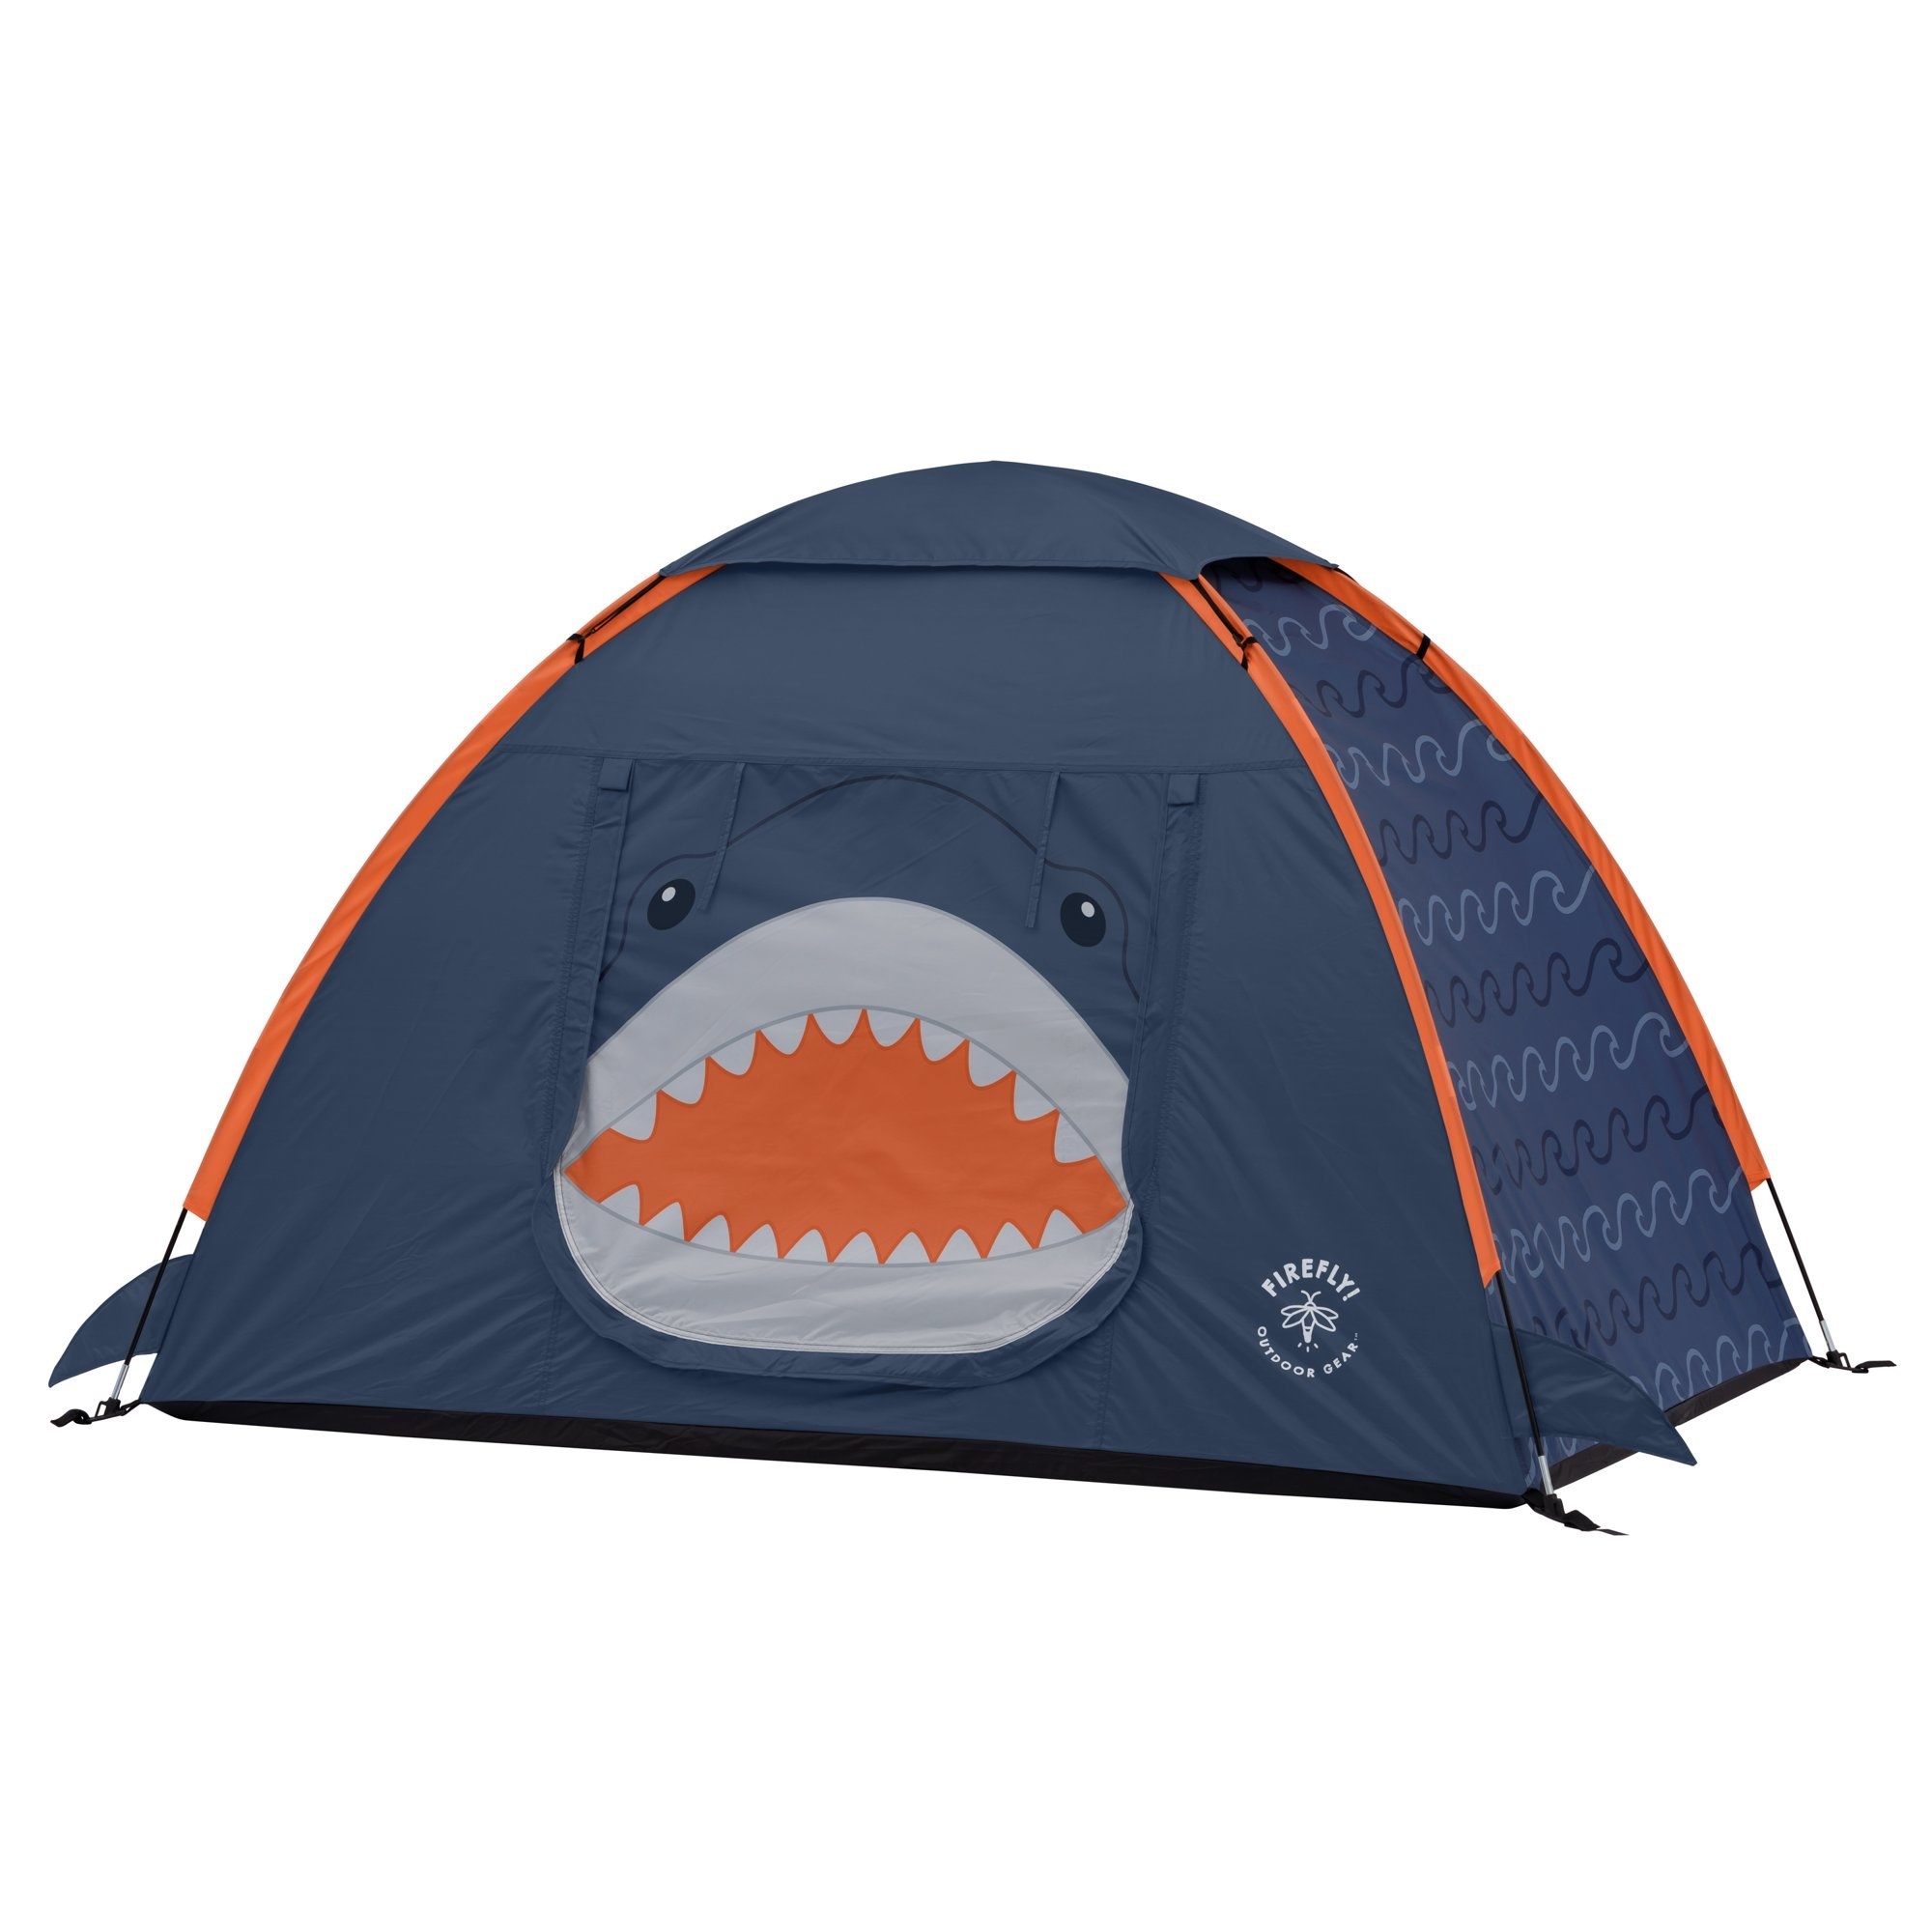 A tent with a zip-open door that features a shark face as art